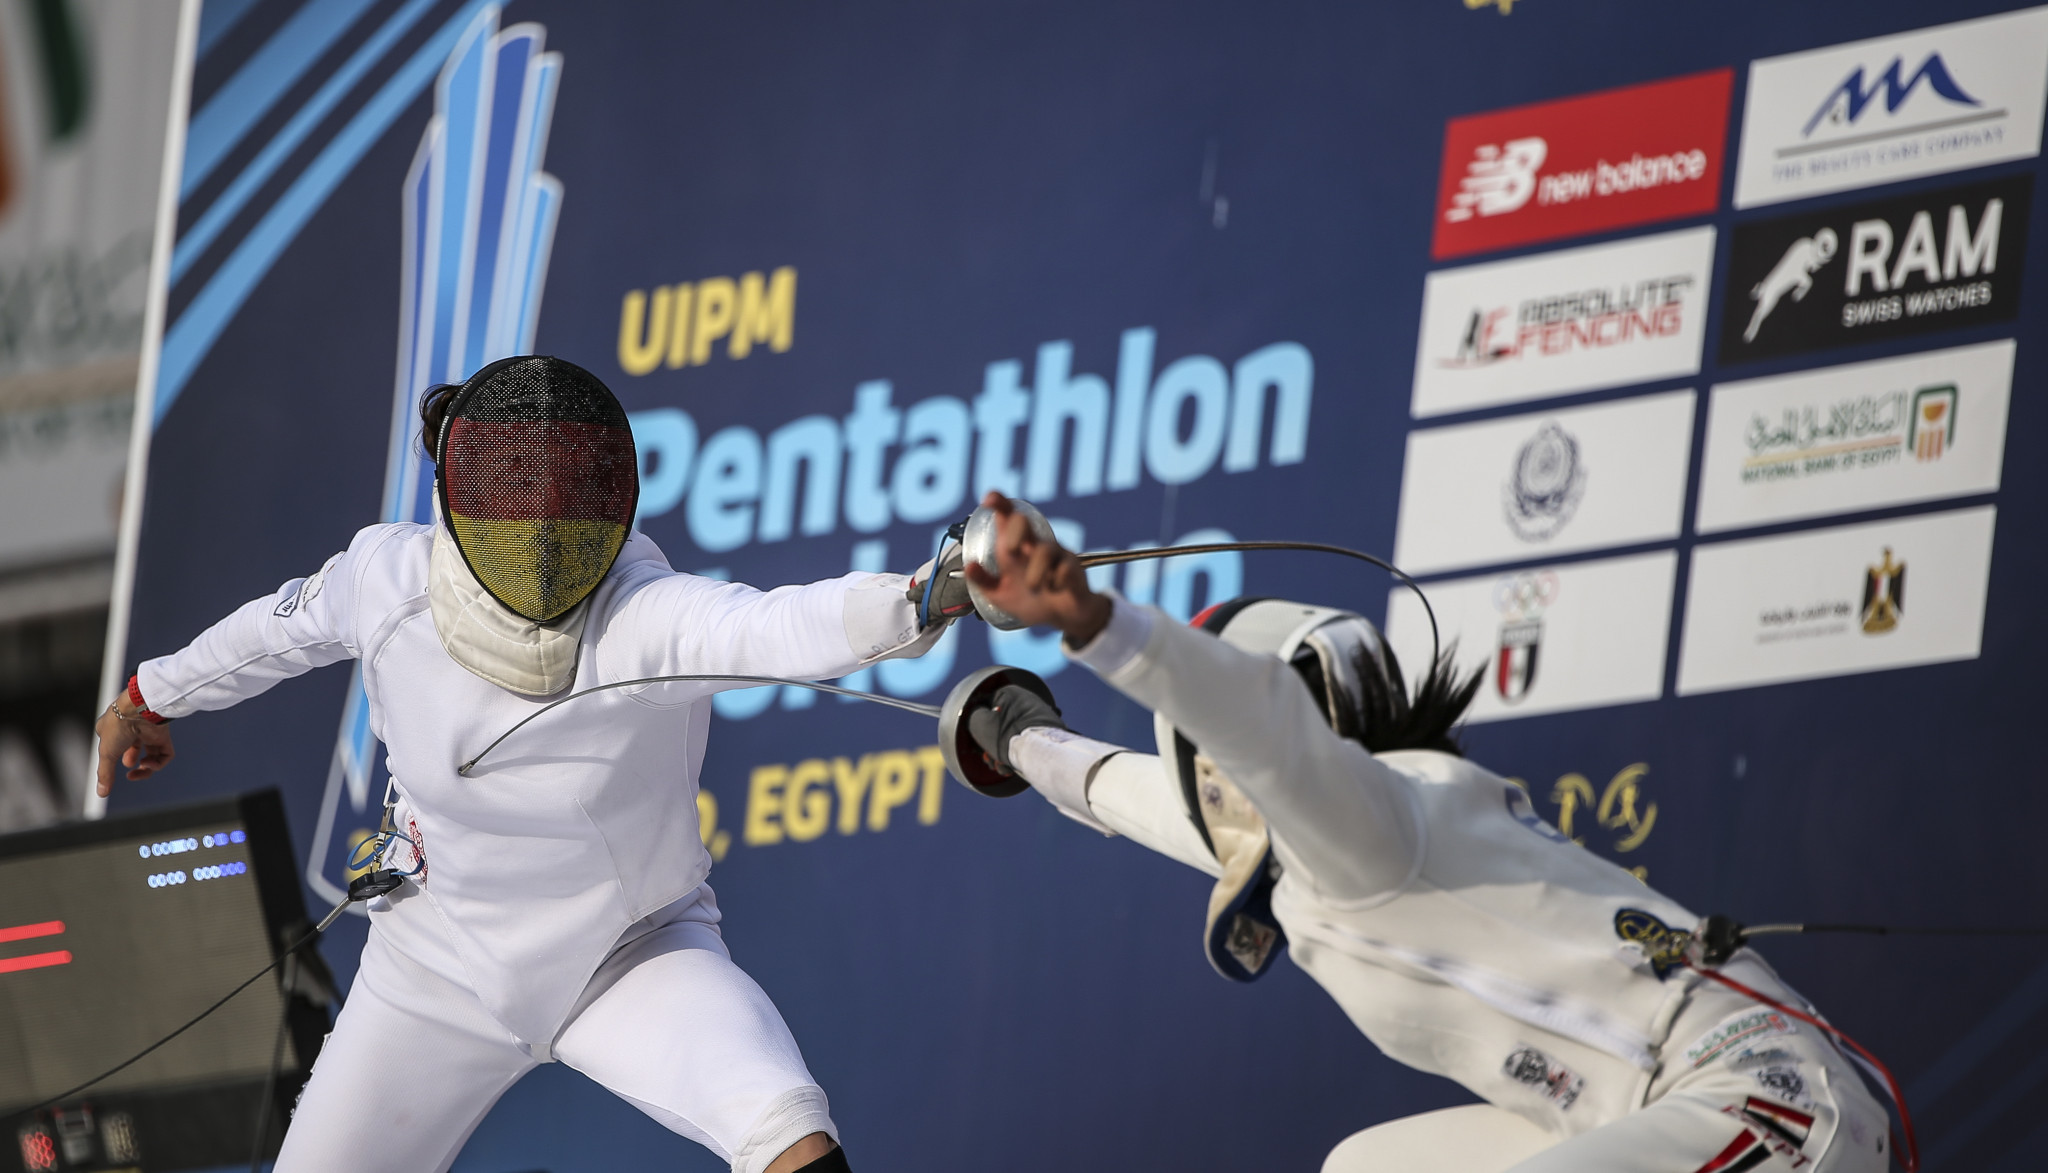 The UIPM World Cup season began in Cairo last month ©UIPM